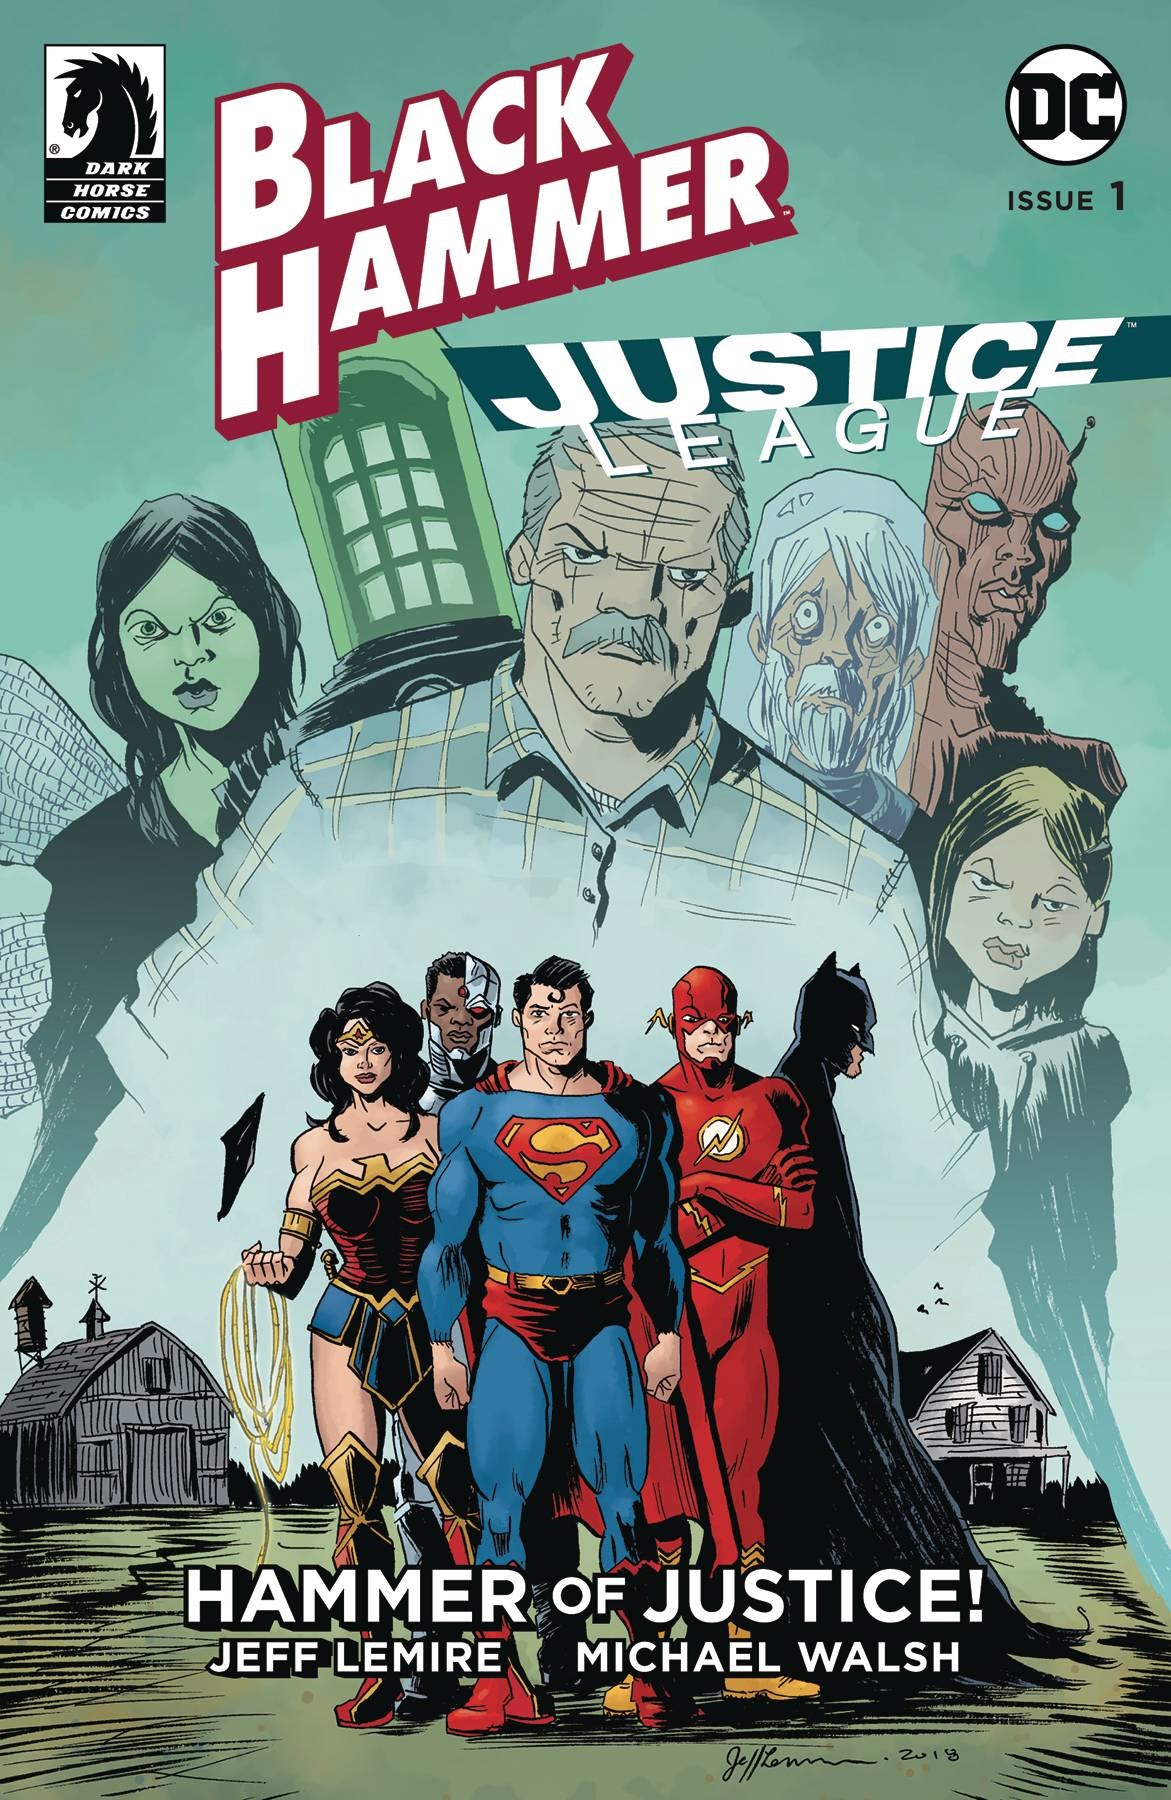 Black Hammer Justice League #1 (Cvr D Lemire) Dark Horse Comics Comic Book